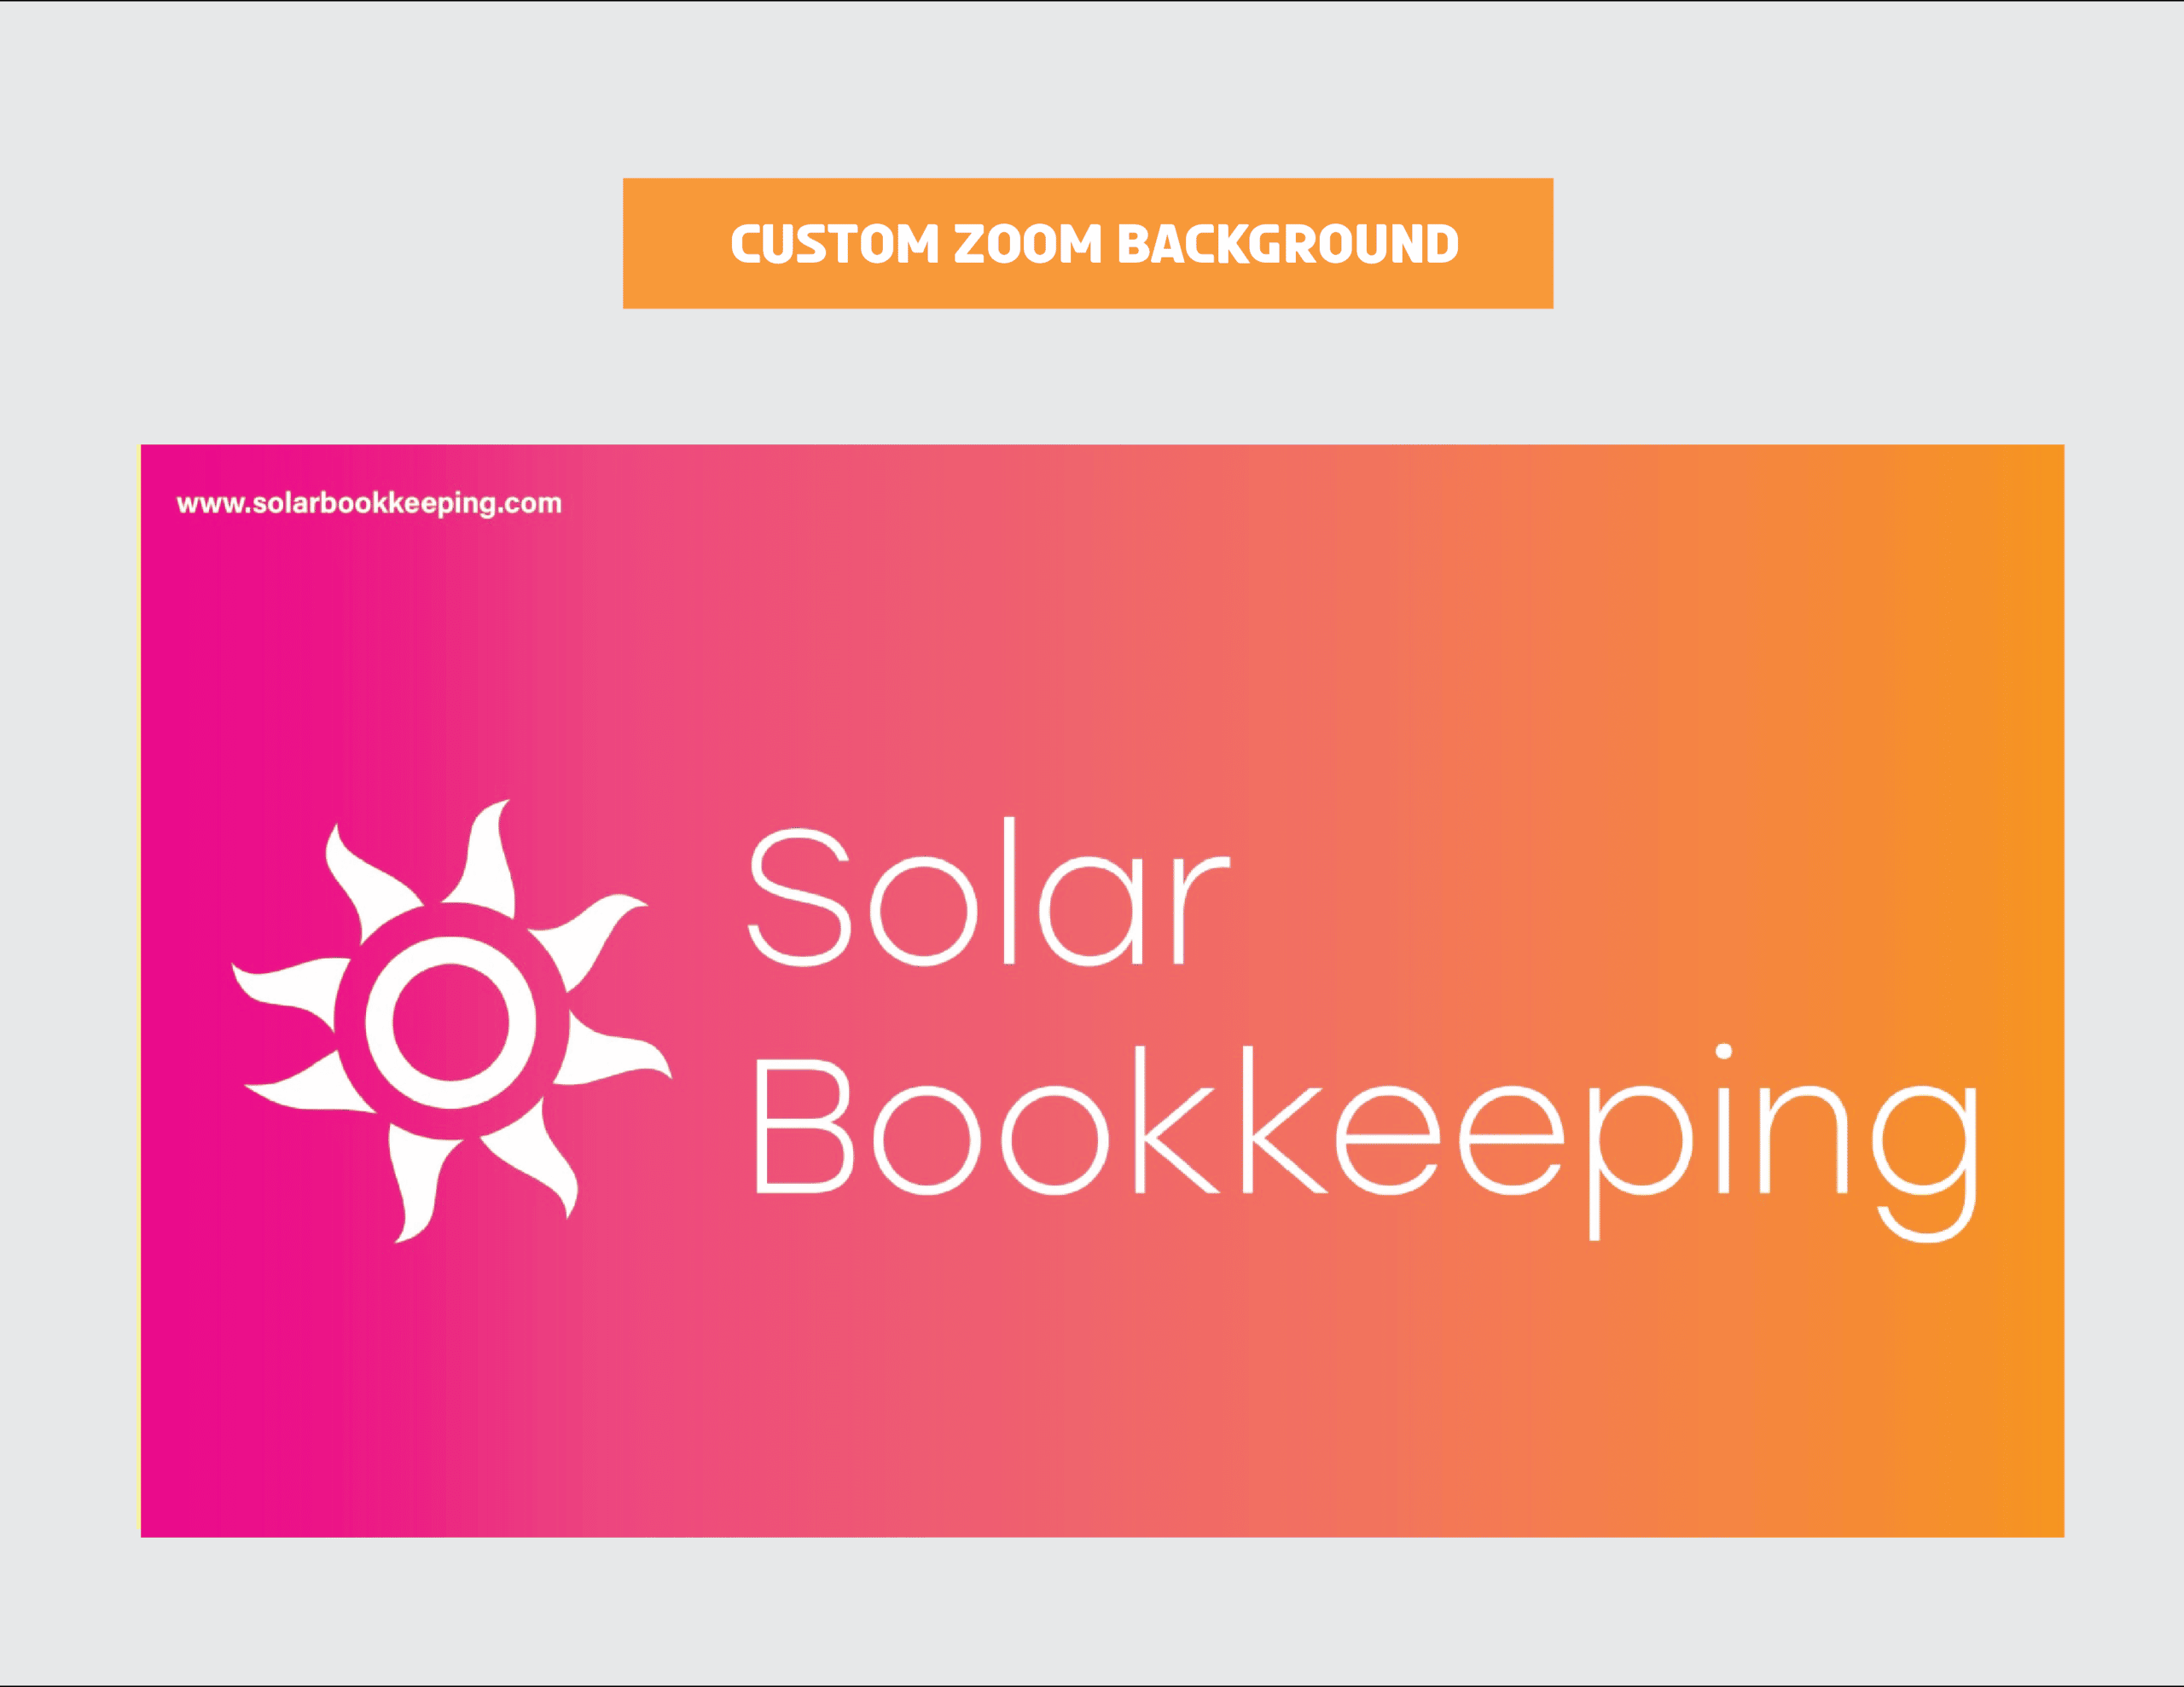 07_SolarBookkeeping_Custom Zoom Background